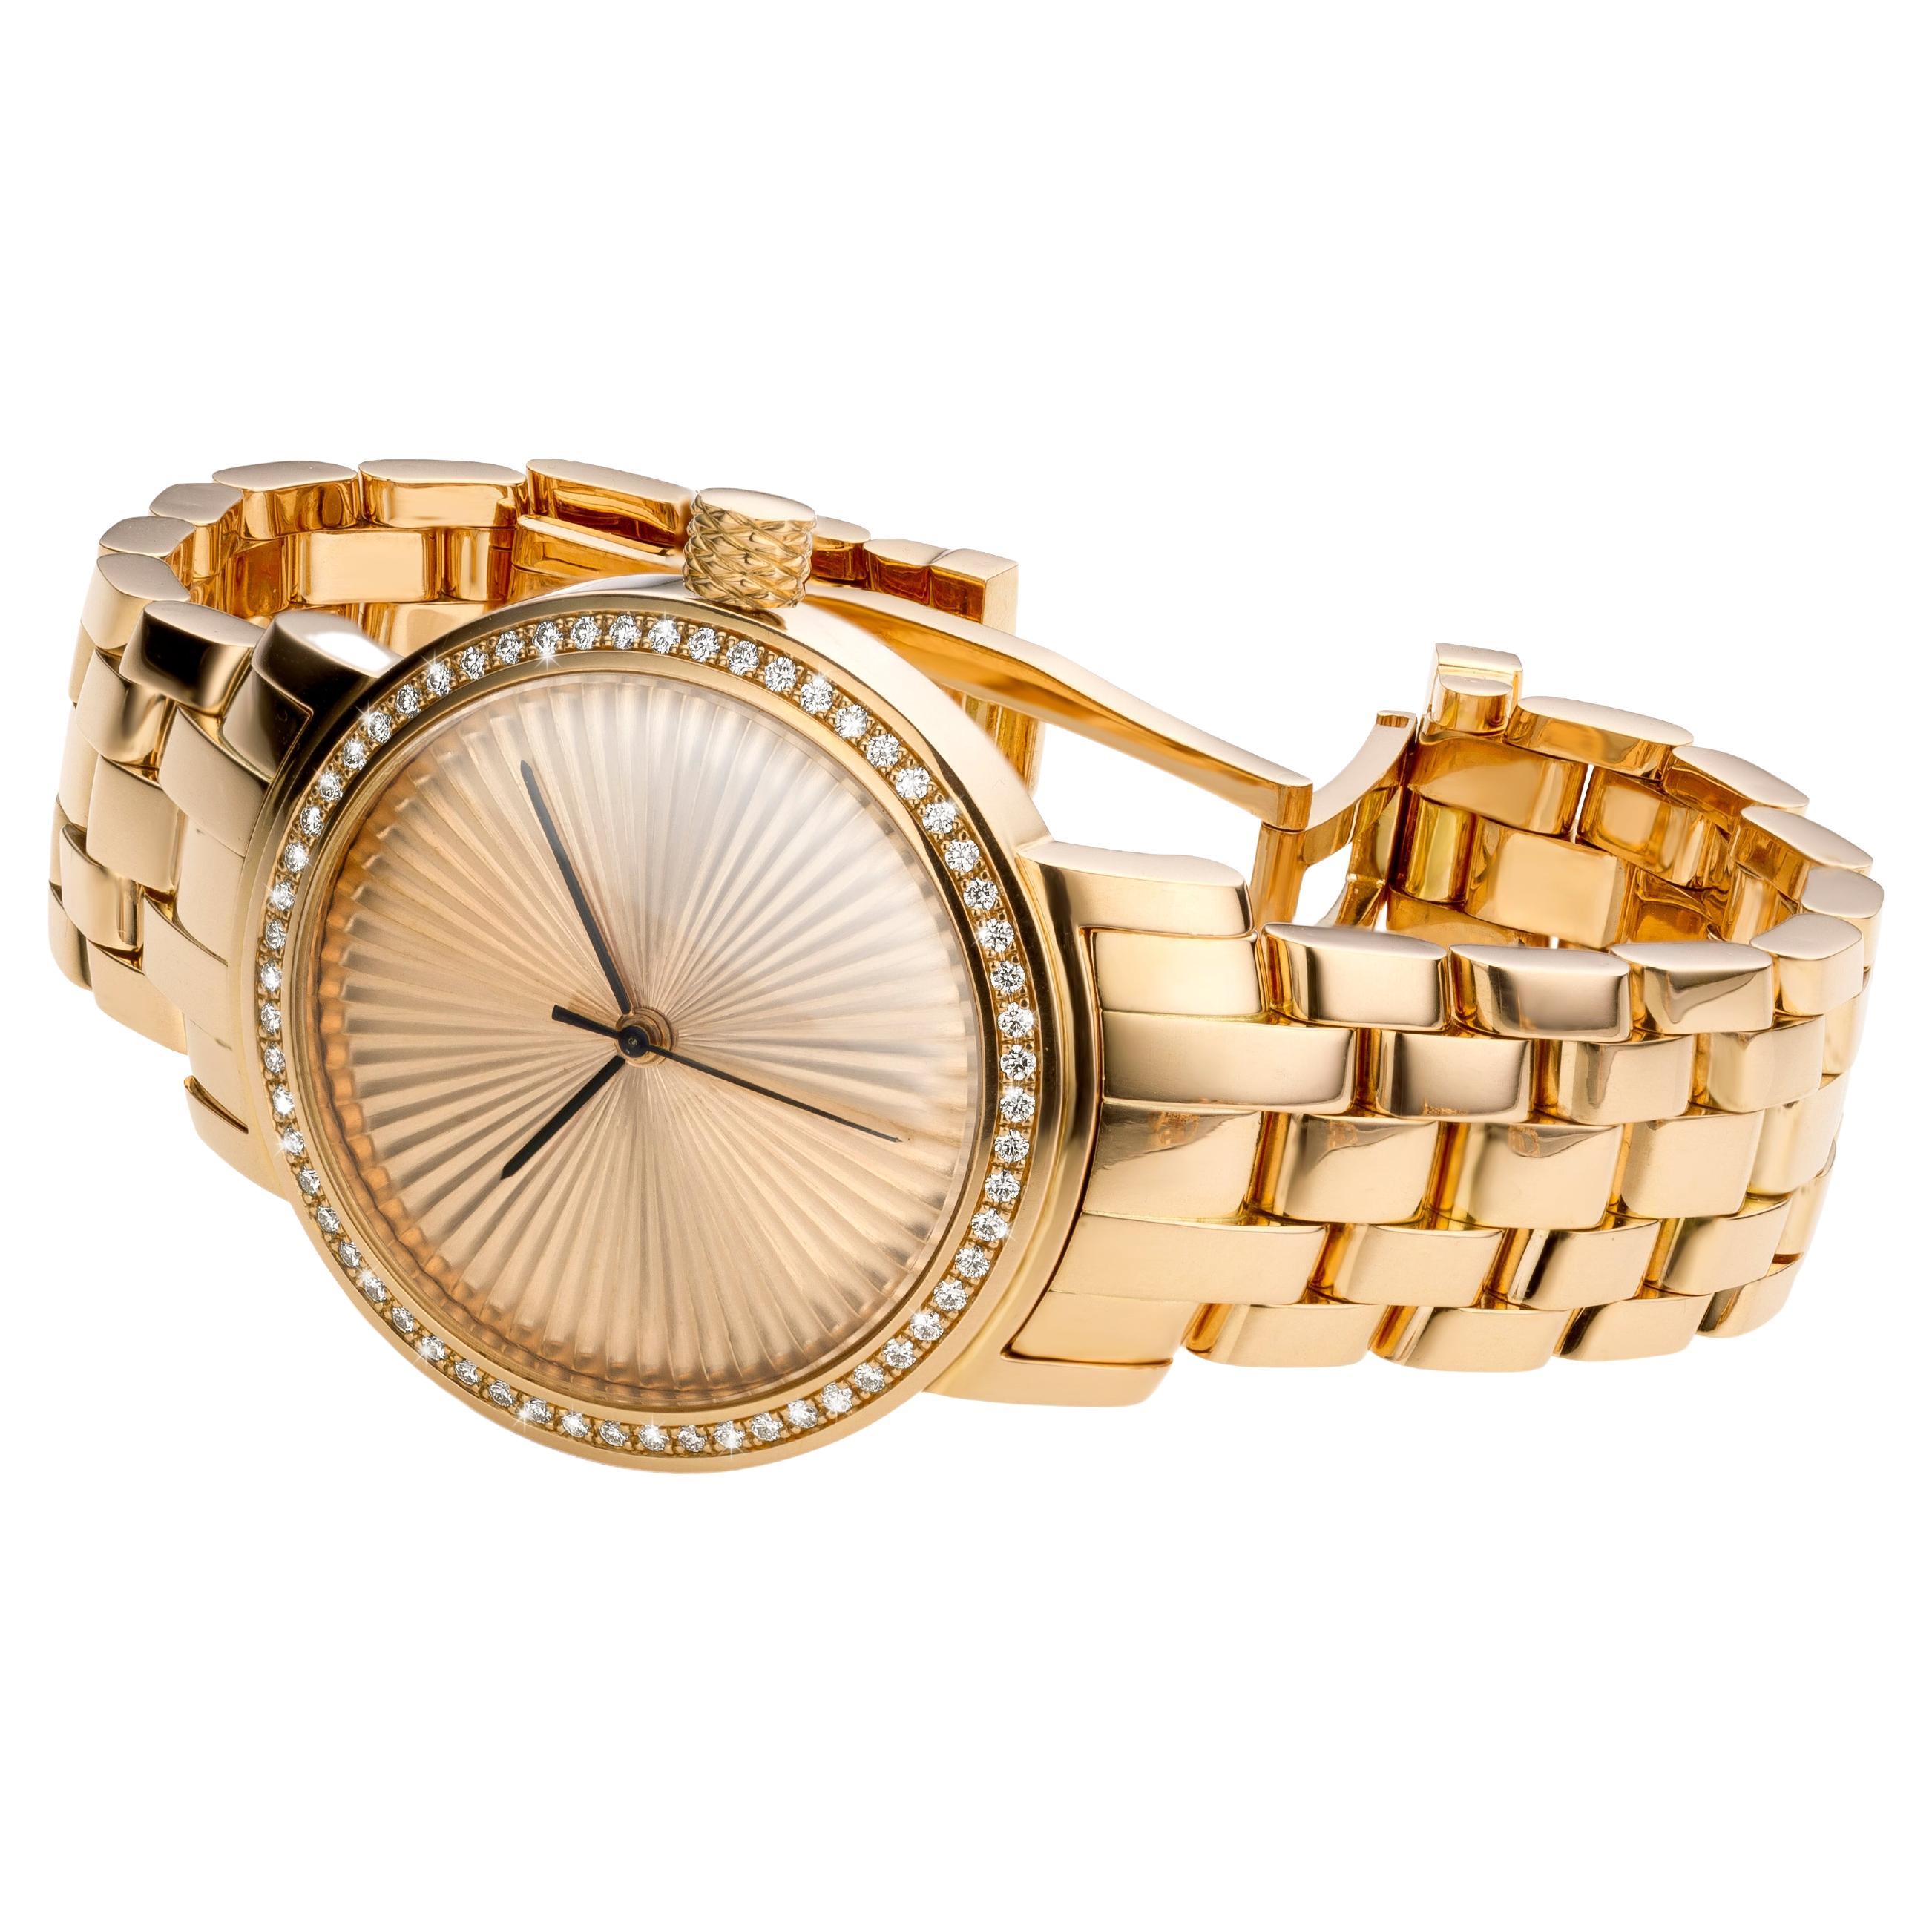 Cober “N°2” Ladies automatic Yellow Gold with 60 Diamonds Wristwatch handmade 